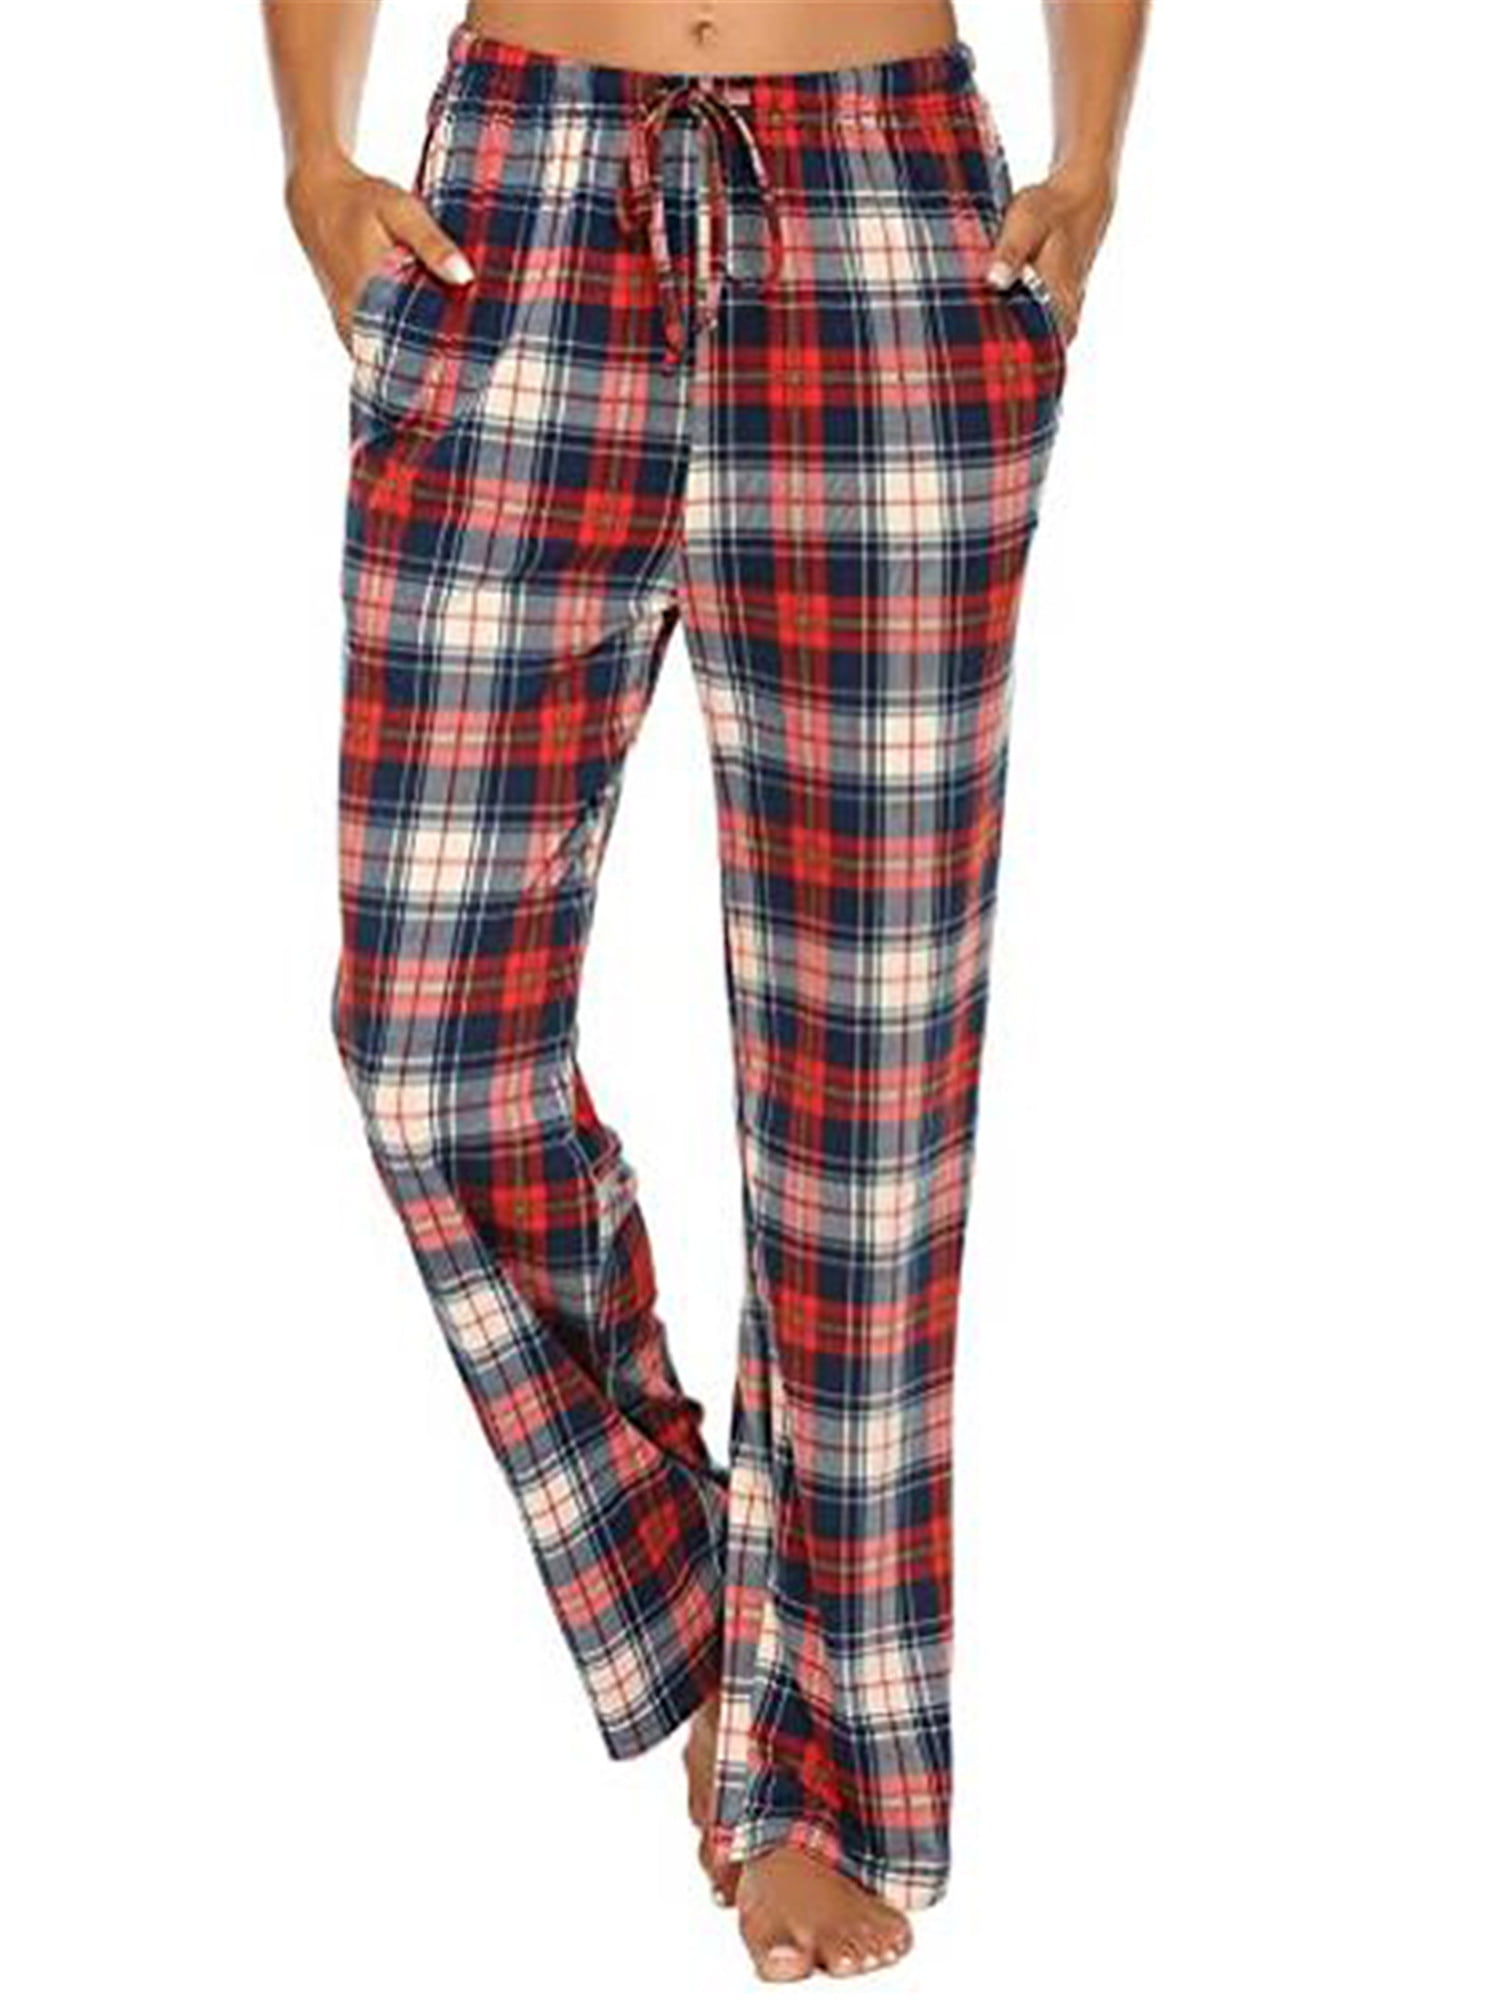 HIMONE Women Flannel Plaid Pajama Lounge Pants Casual Sleep Pjs Bottoms ...